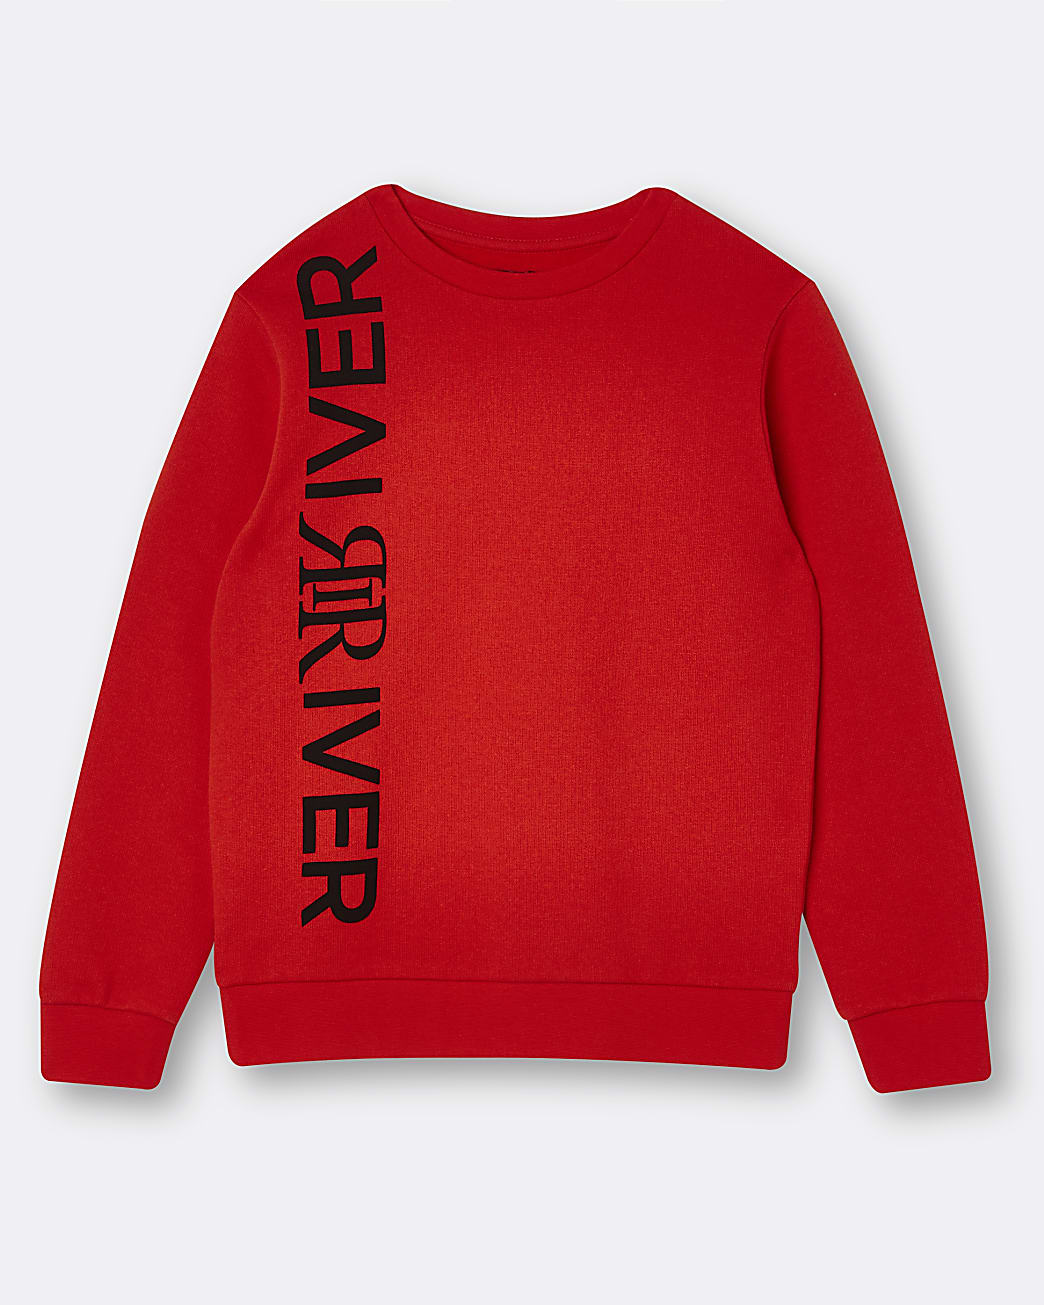 Age 13+ boys red River sweatshirt